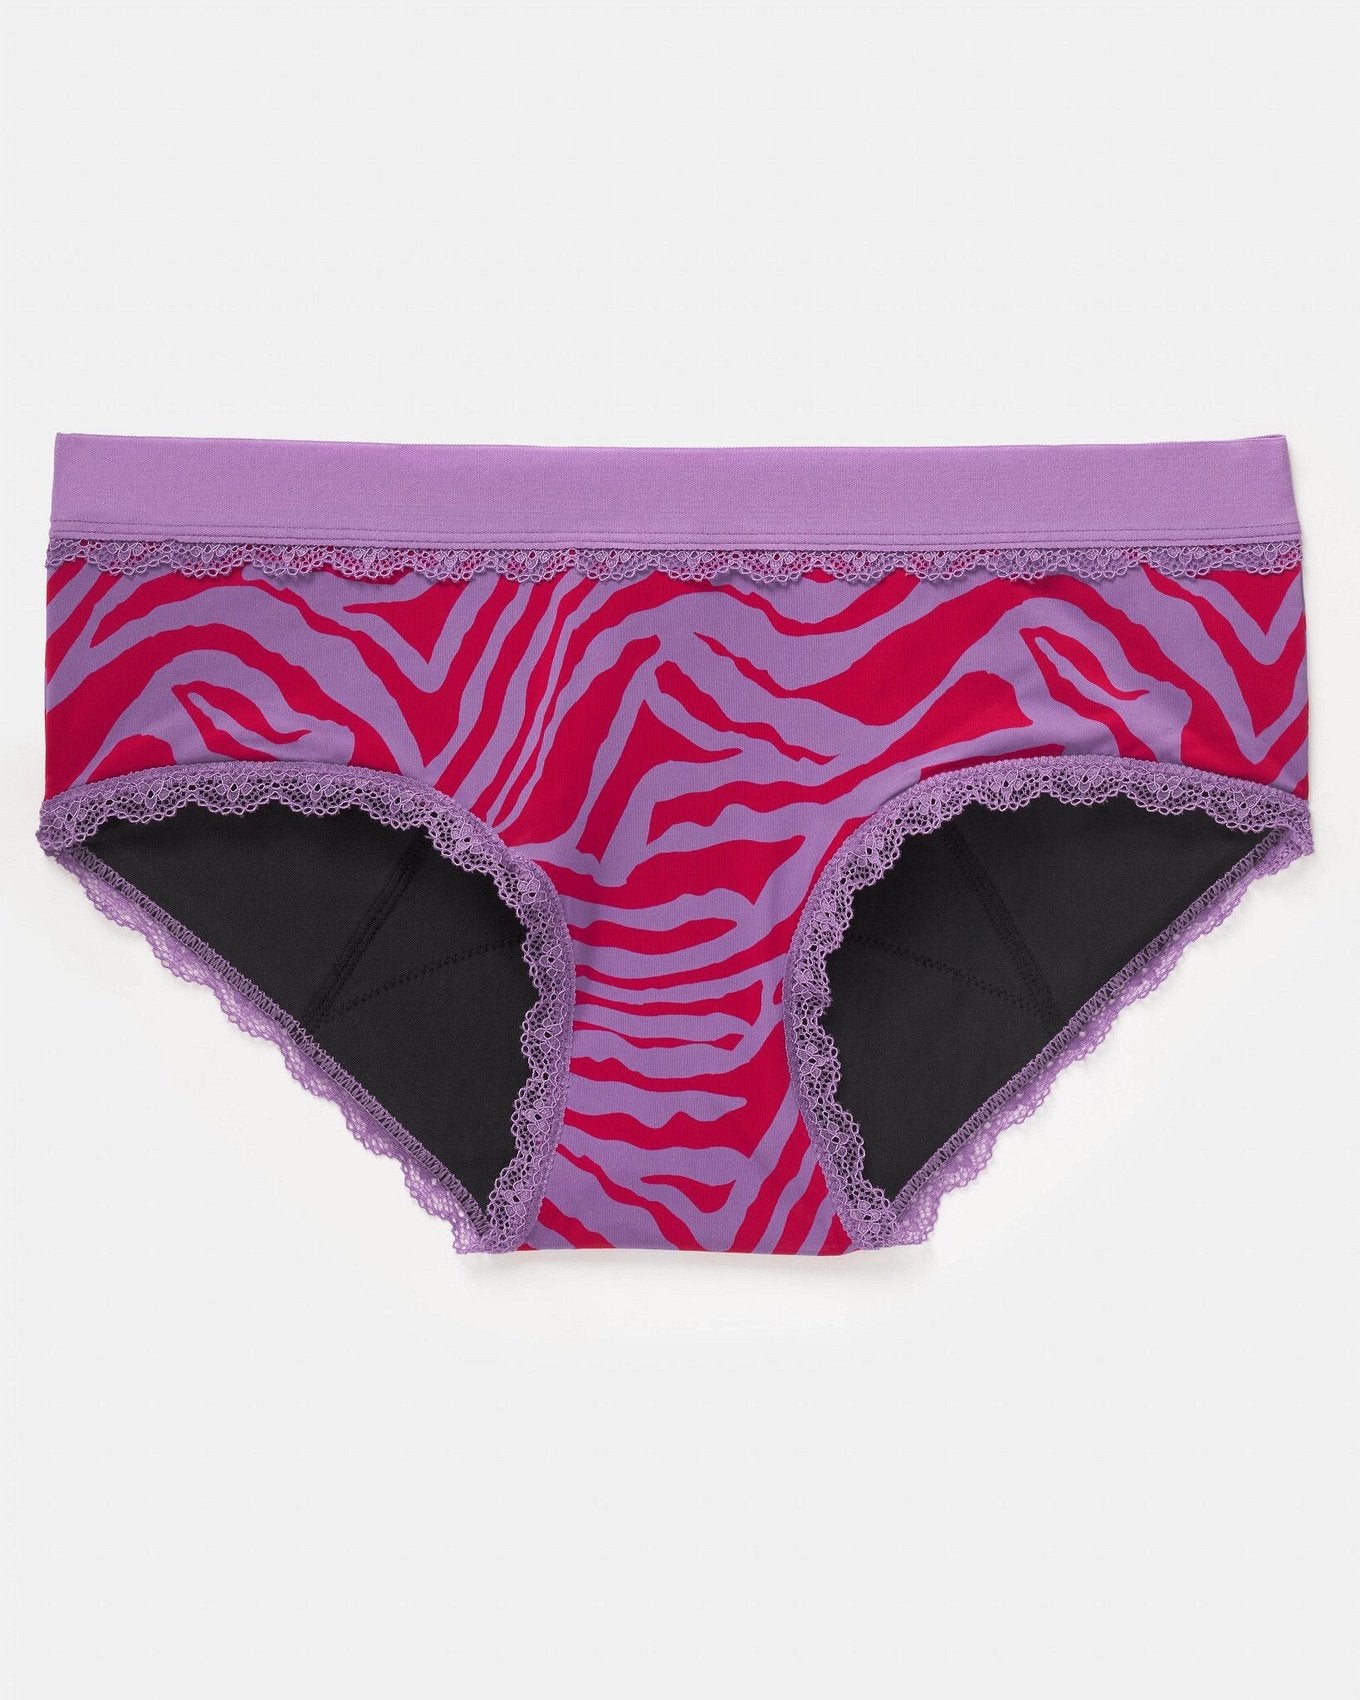 Joyja Olivia period-proof panty in color Secret Safari C02 and shape hipster